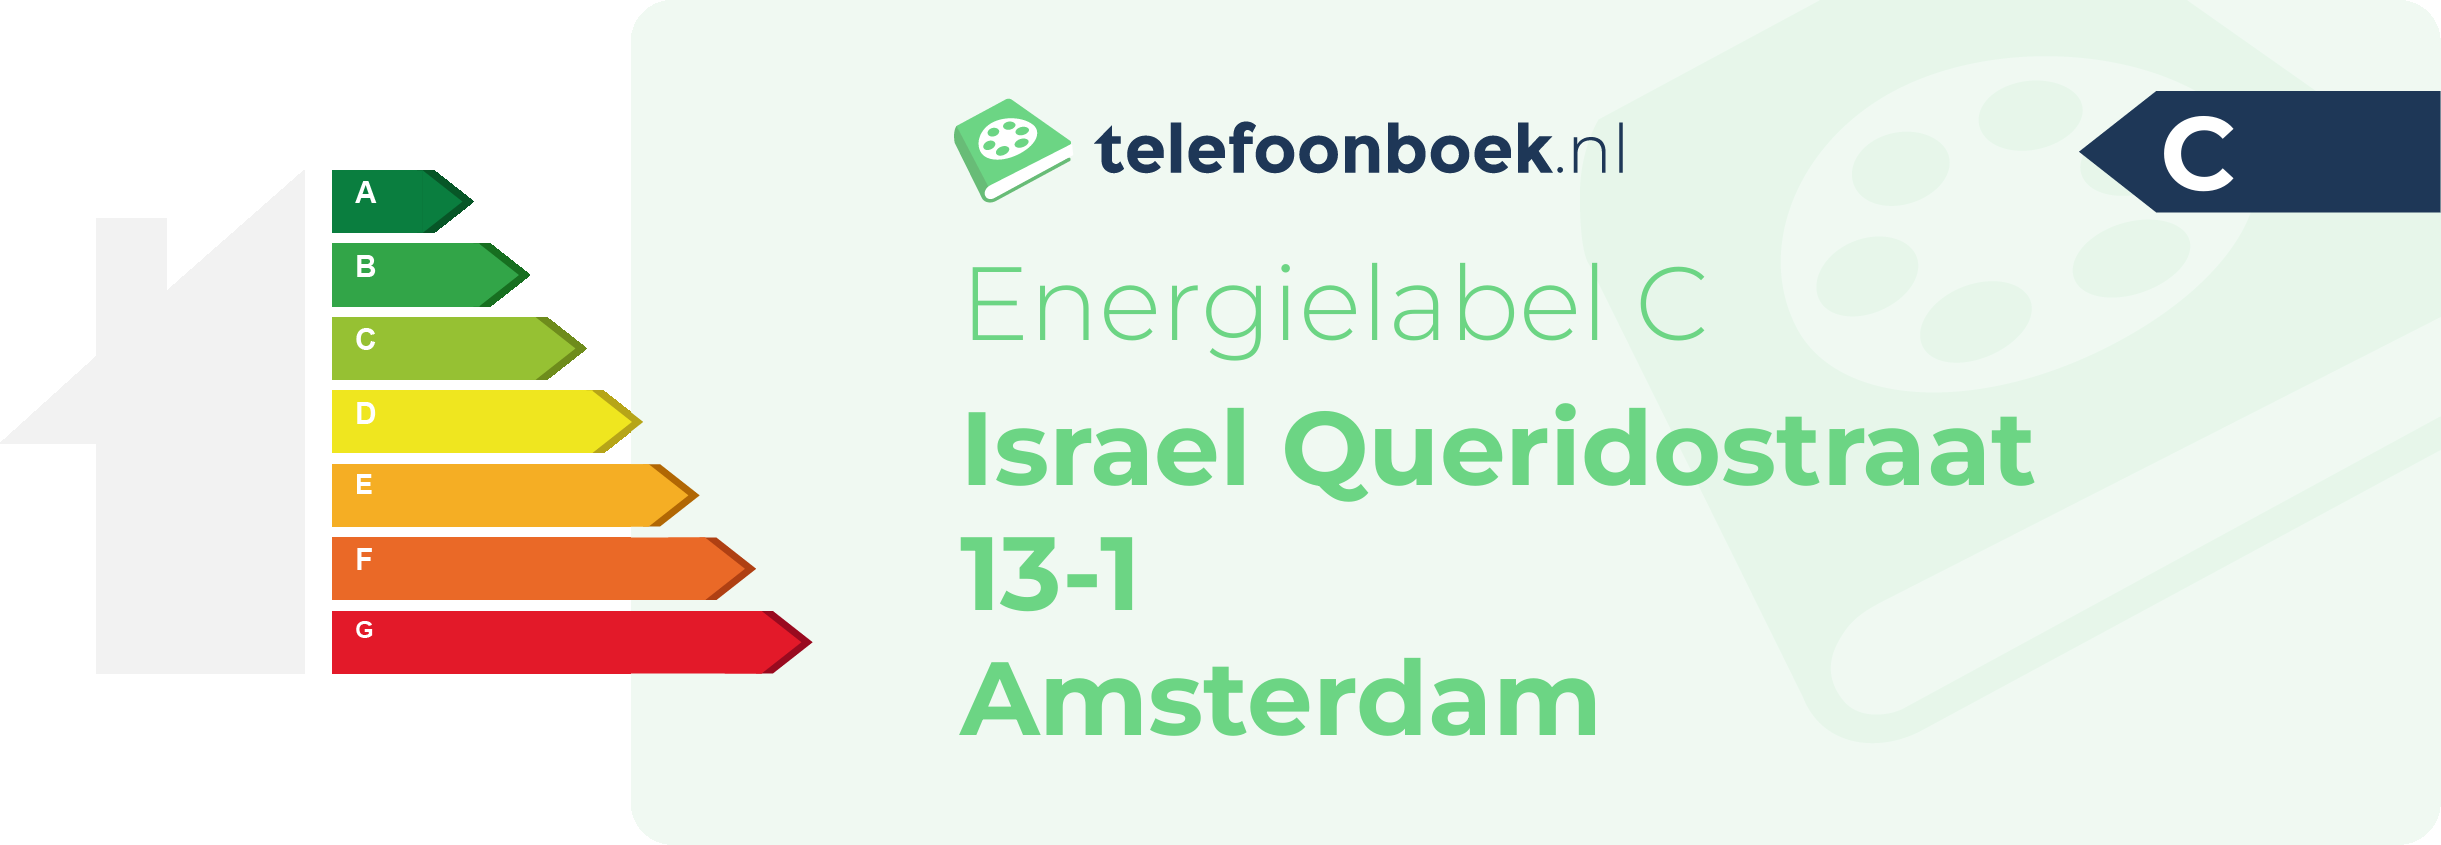 Energielabel Israel Queridostraat 13-1 Amsterdam